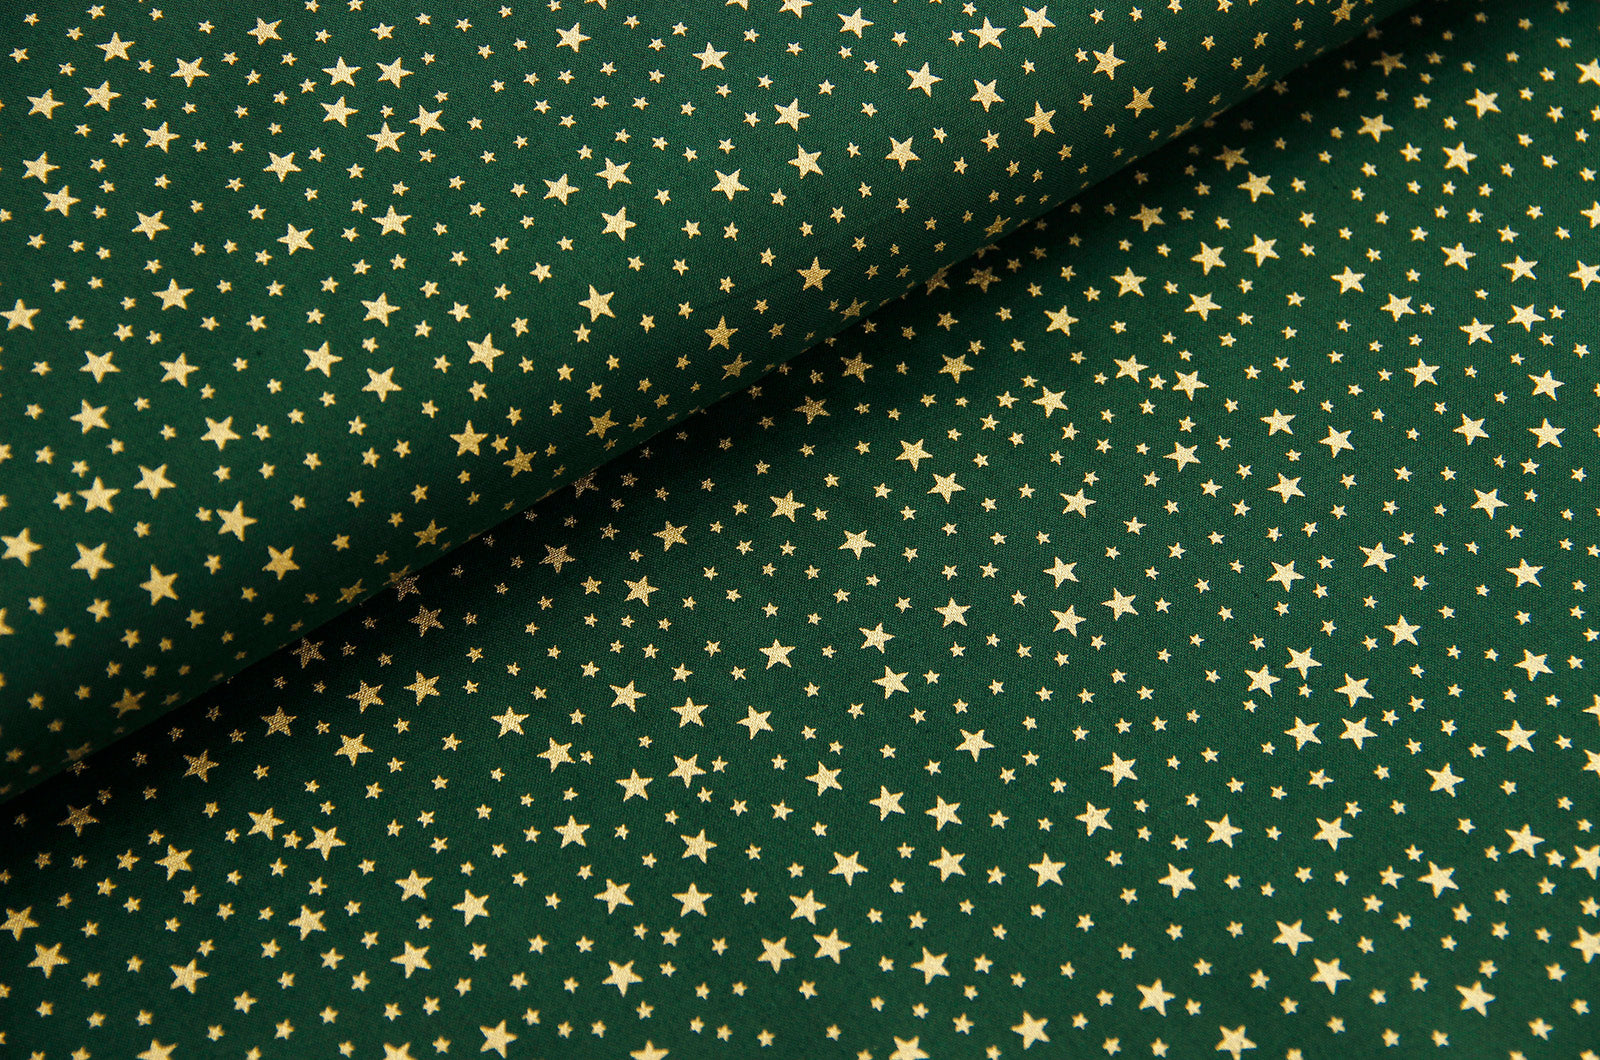 003 stars green